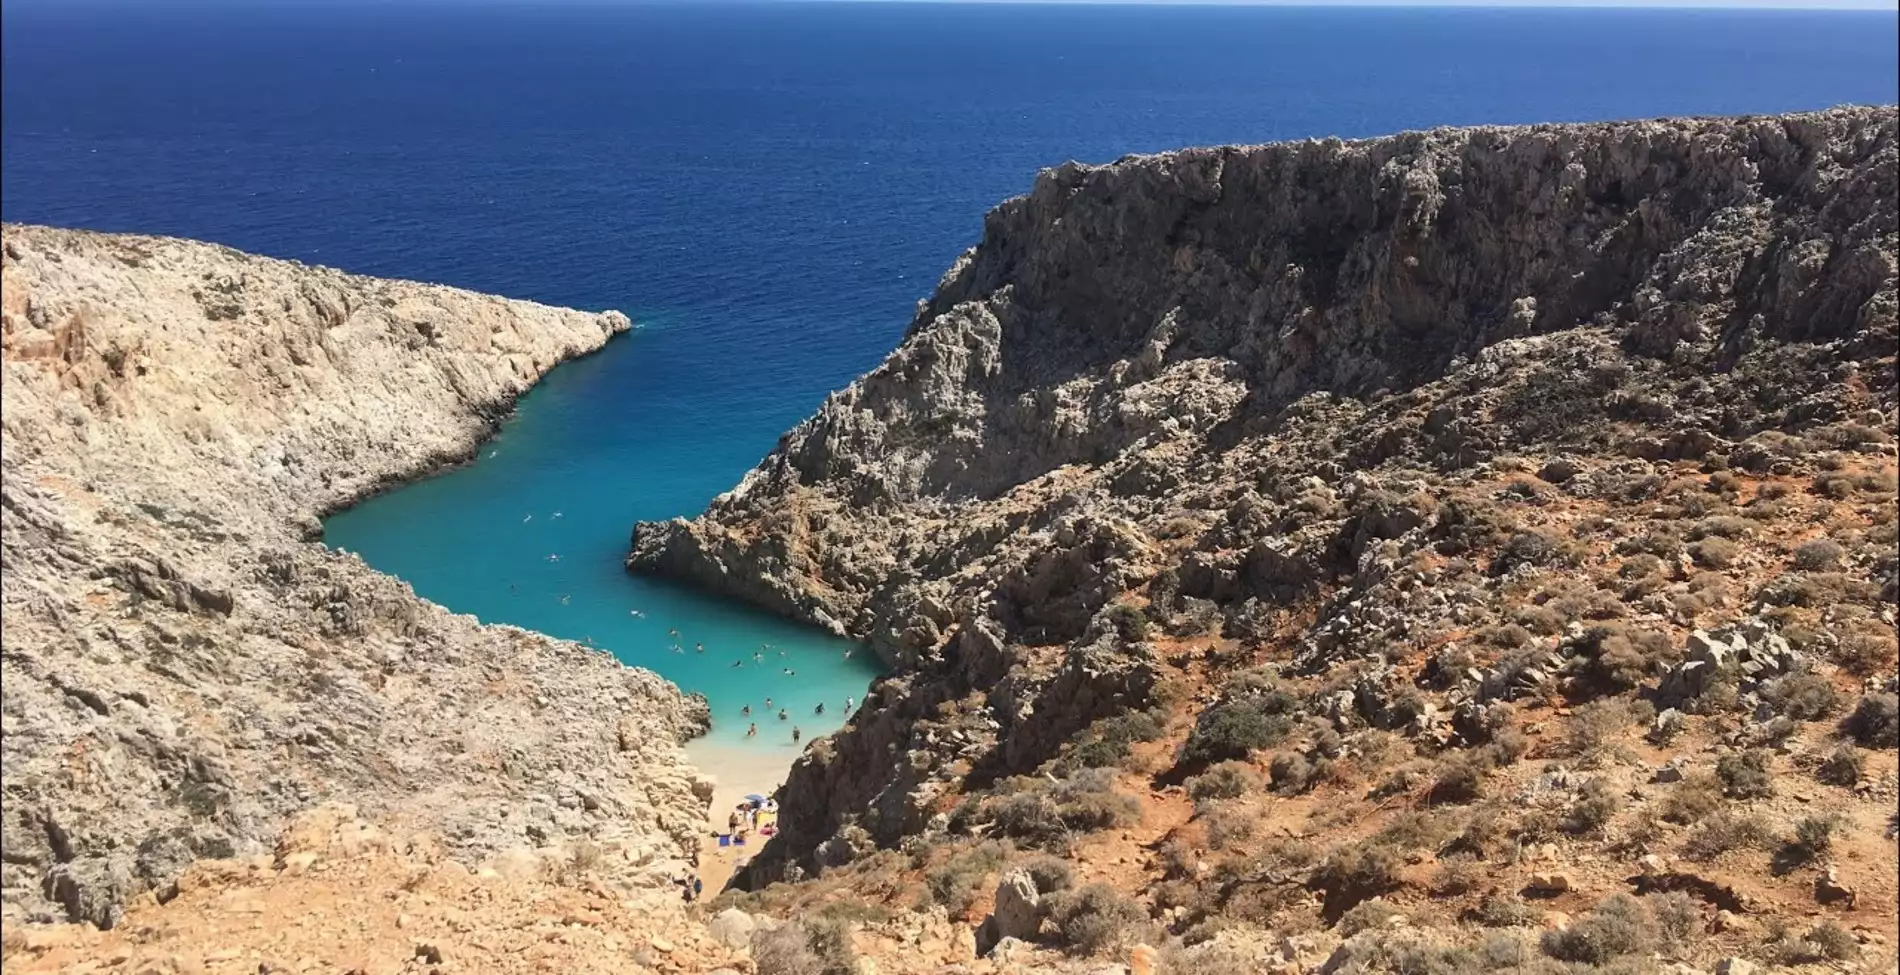 Sheitan Ports: The exotic "devil harbours" of Crete1